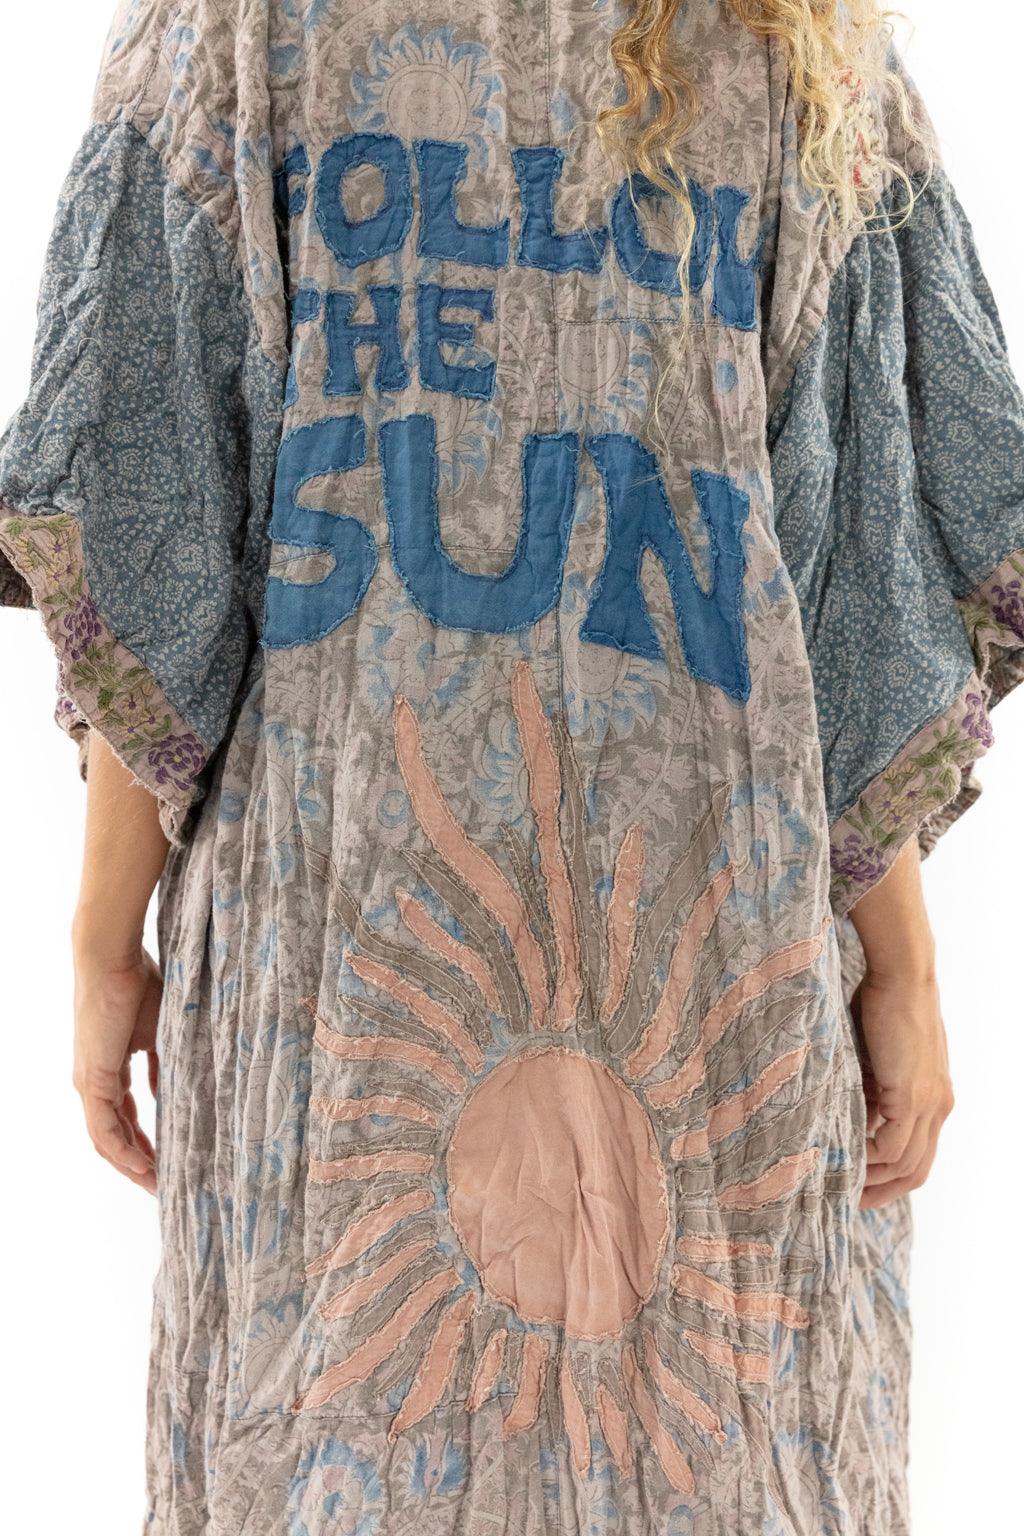 Follow the Sun Sinchu Kimono - Magnolia Pearl Clothing